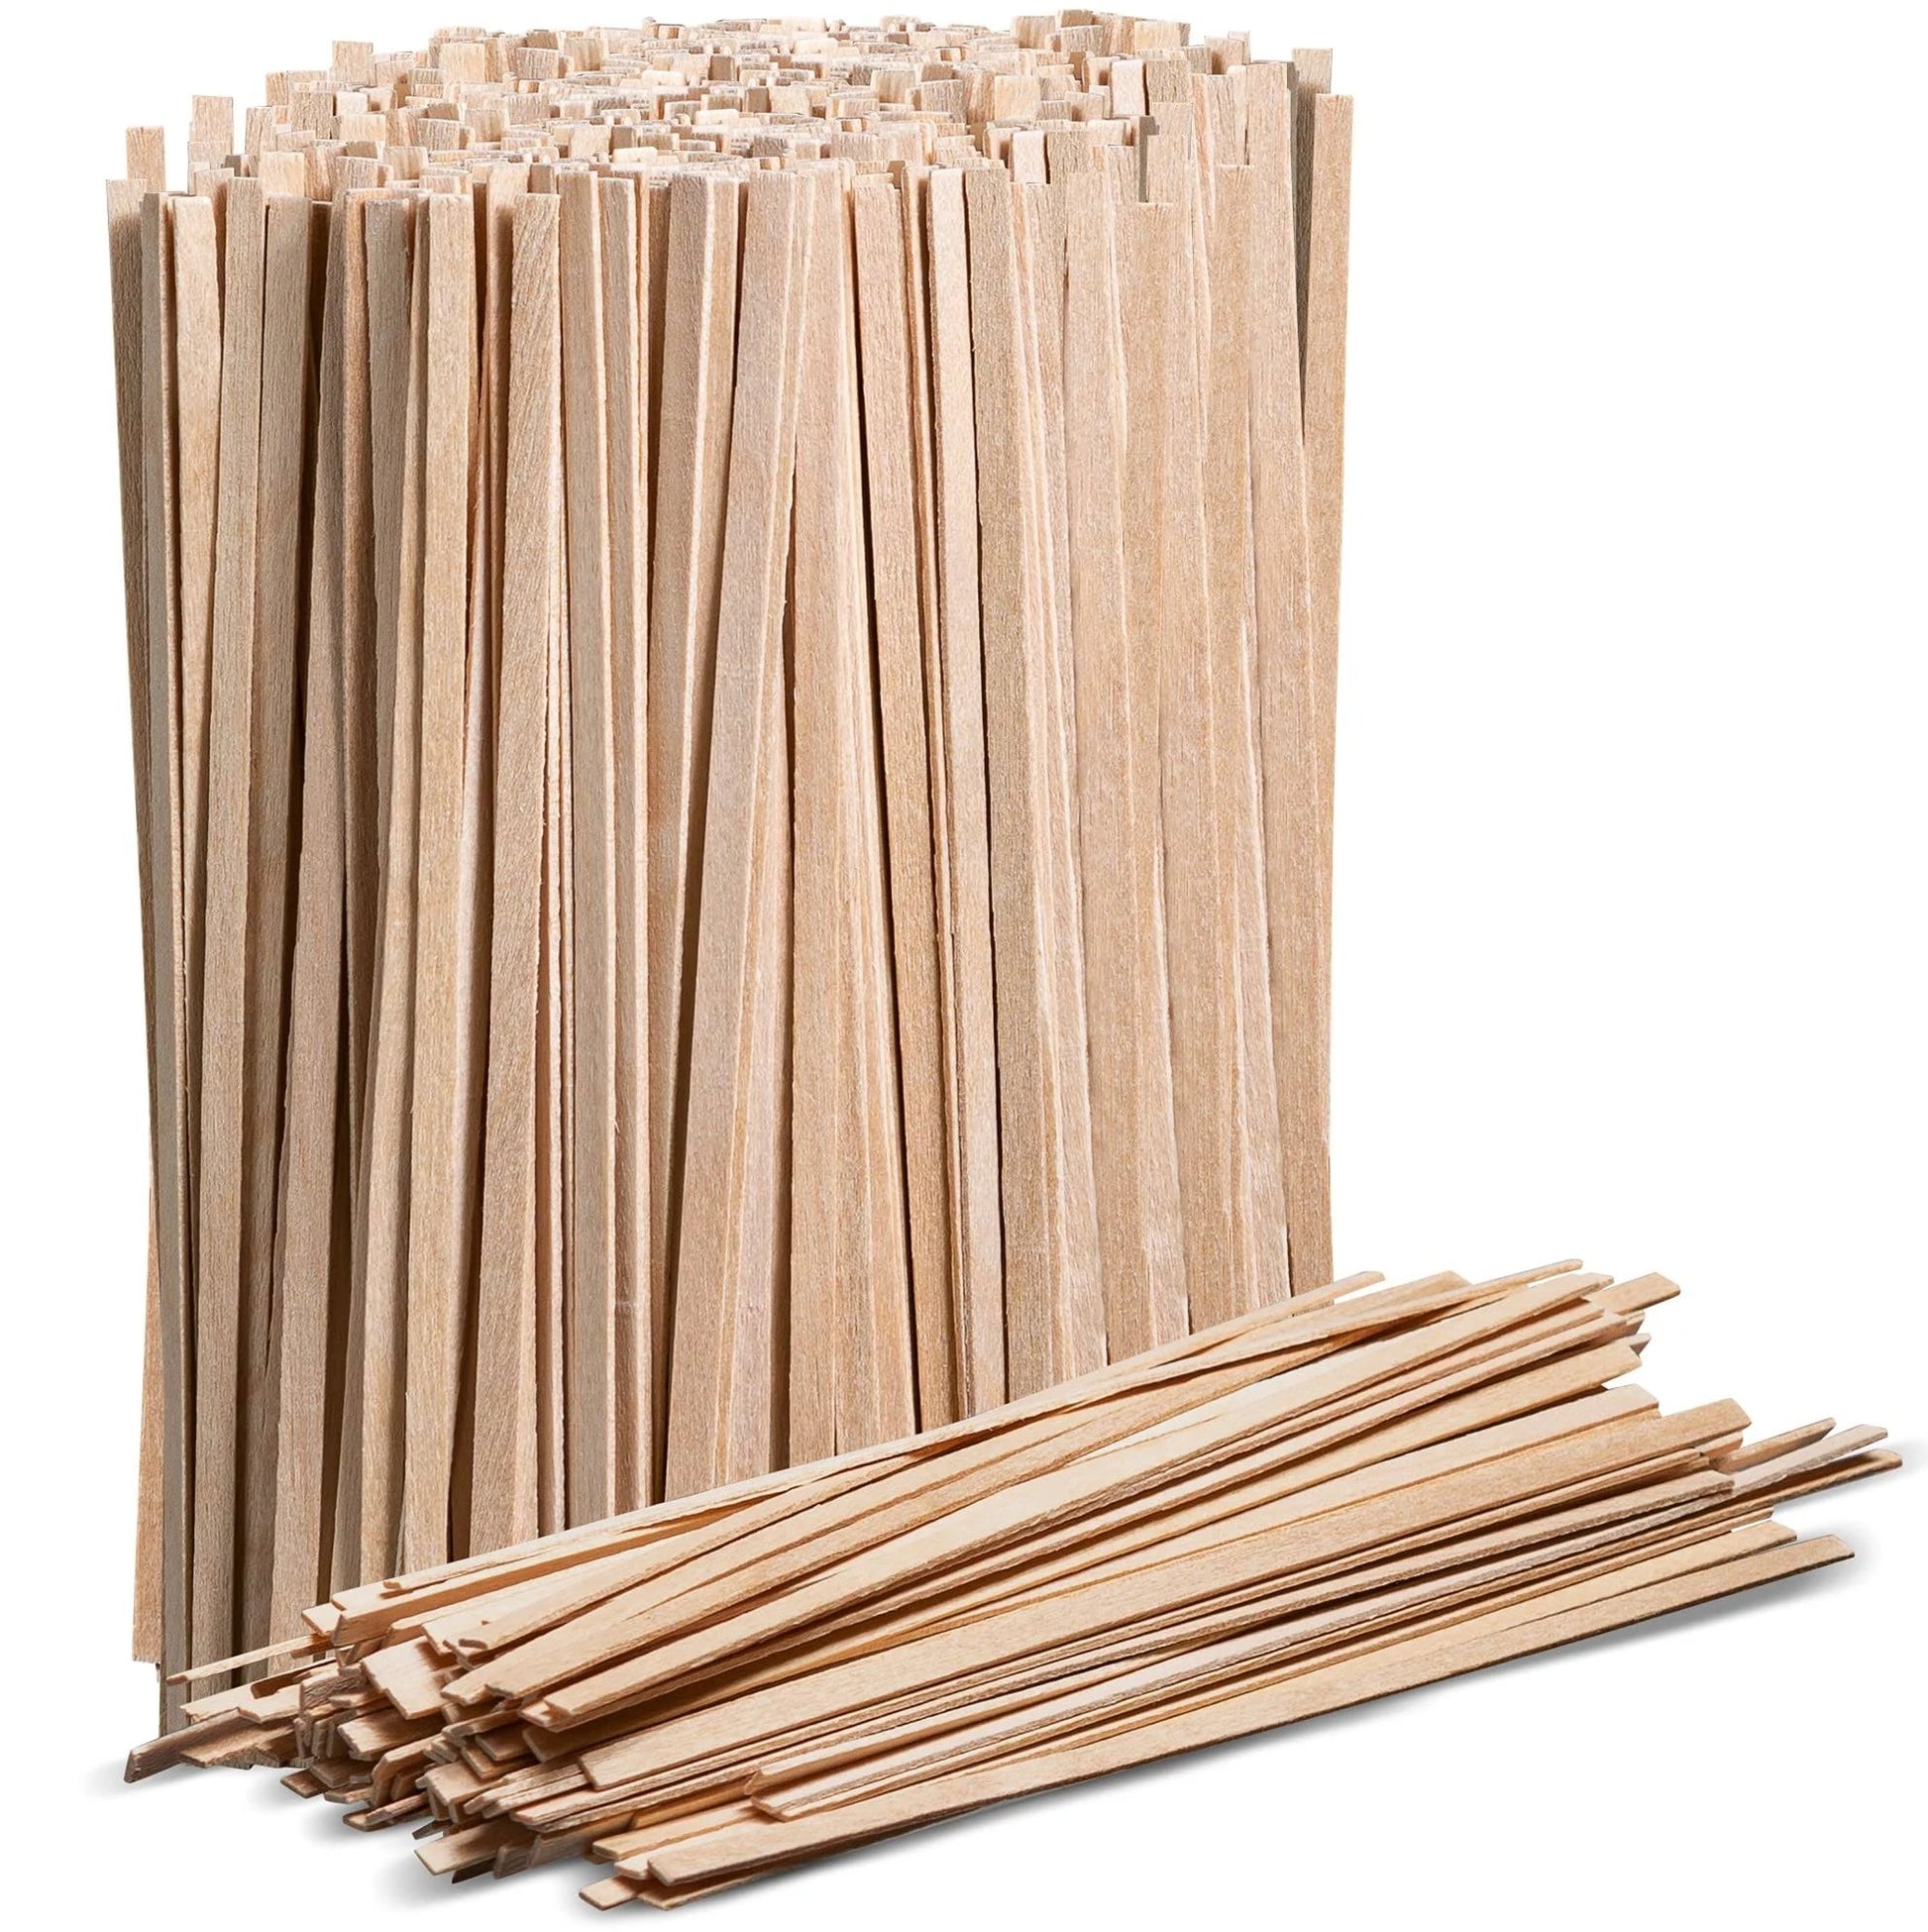 Karat 5.5 inch Wooden Stirrers by PolyKing Stir Sticks, One Box | Coffee Wholesale USA